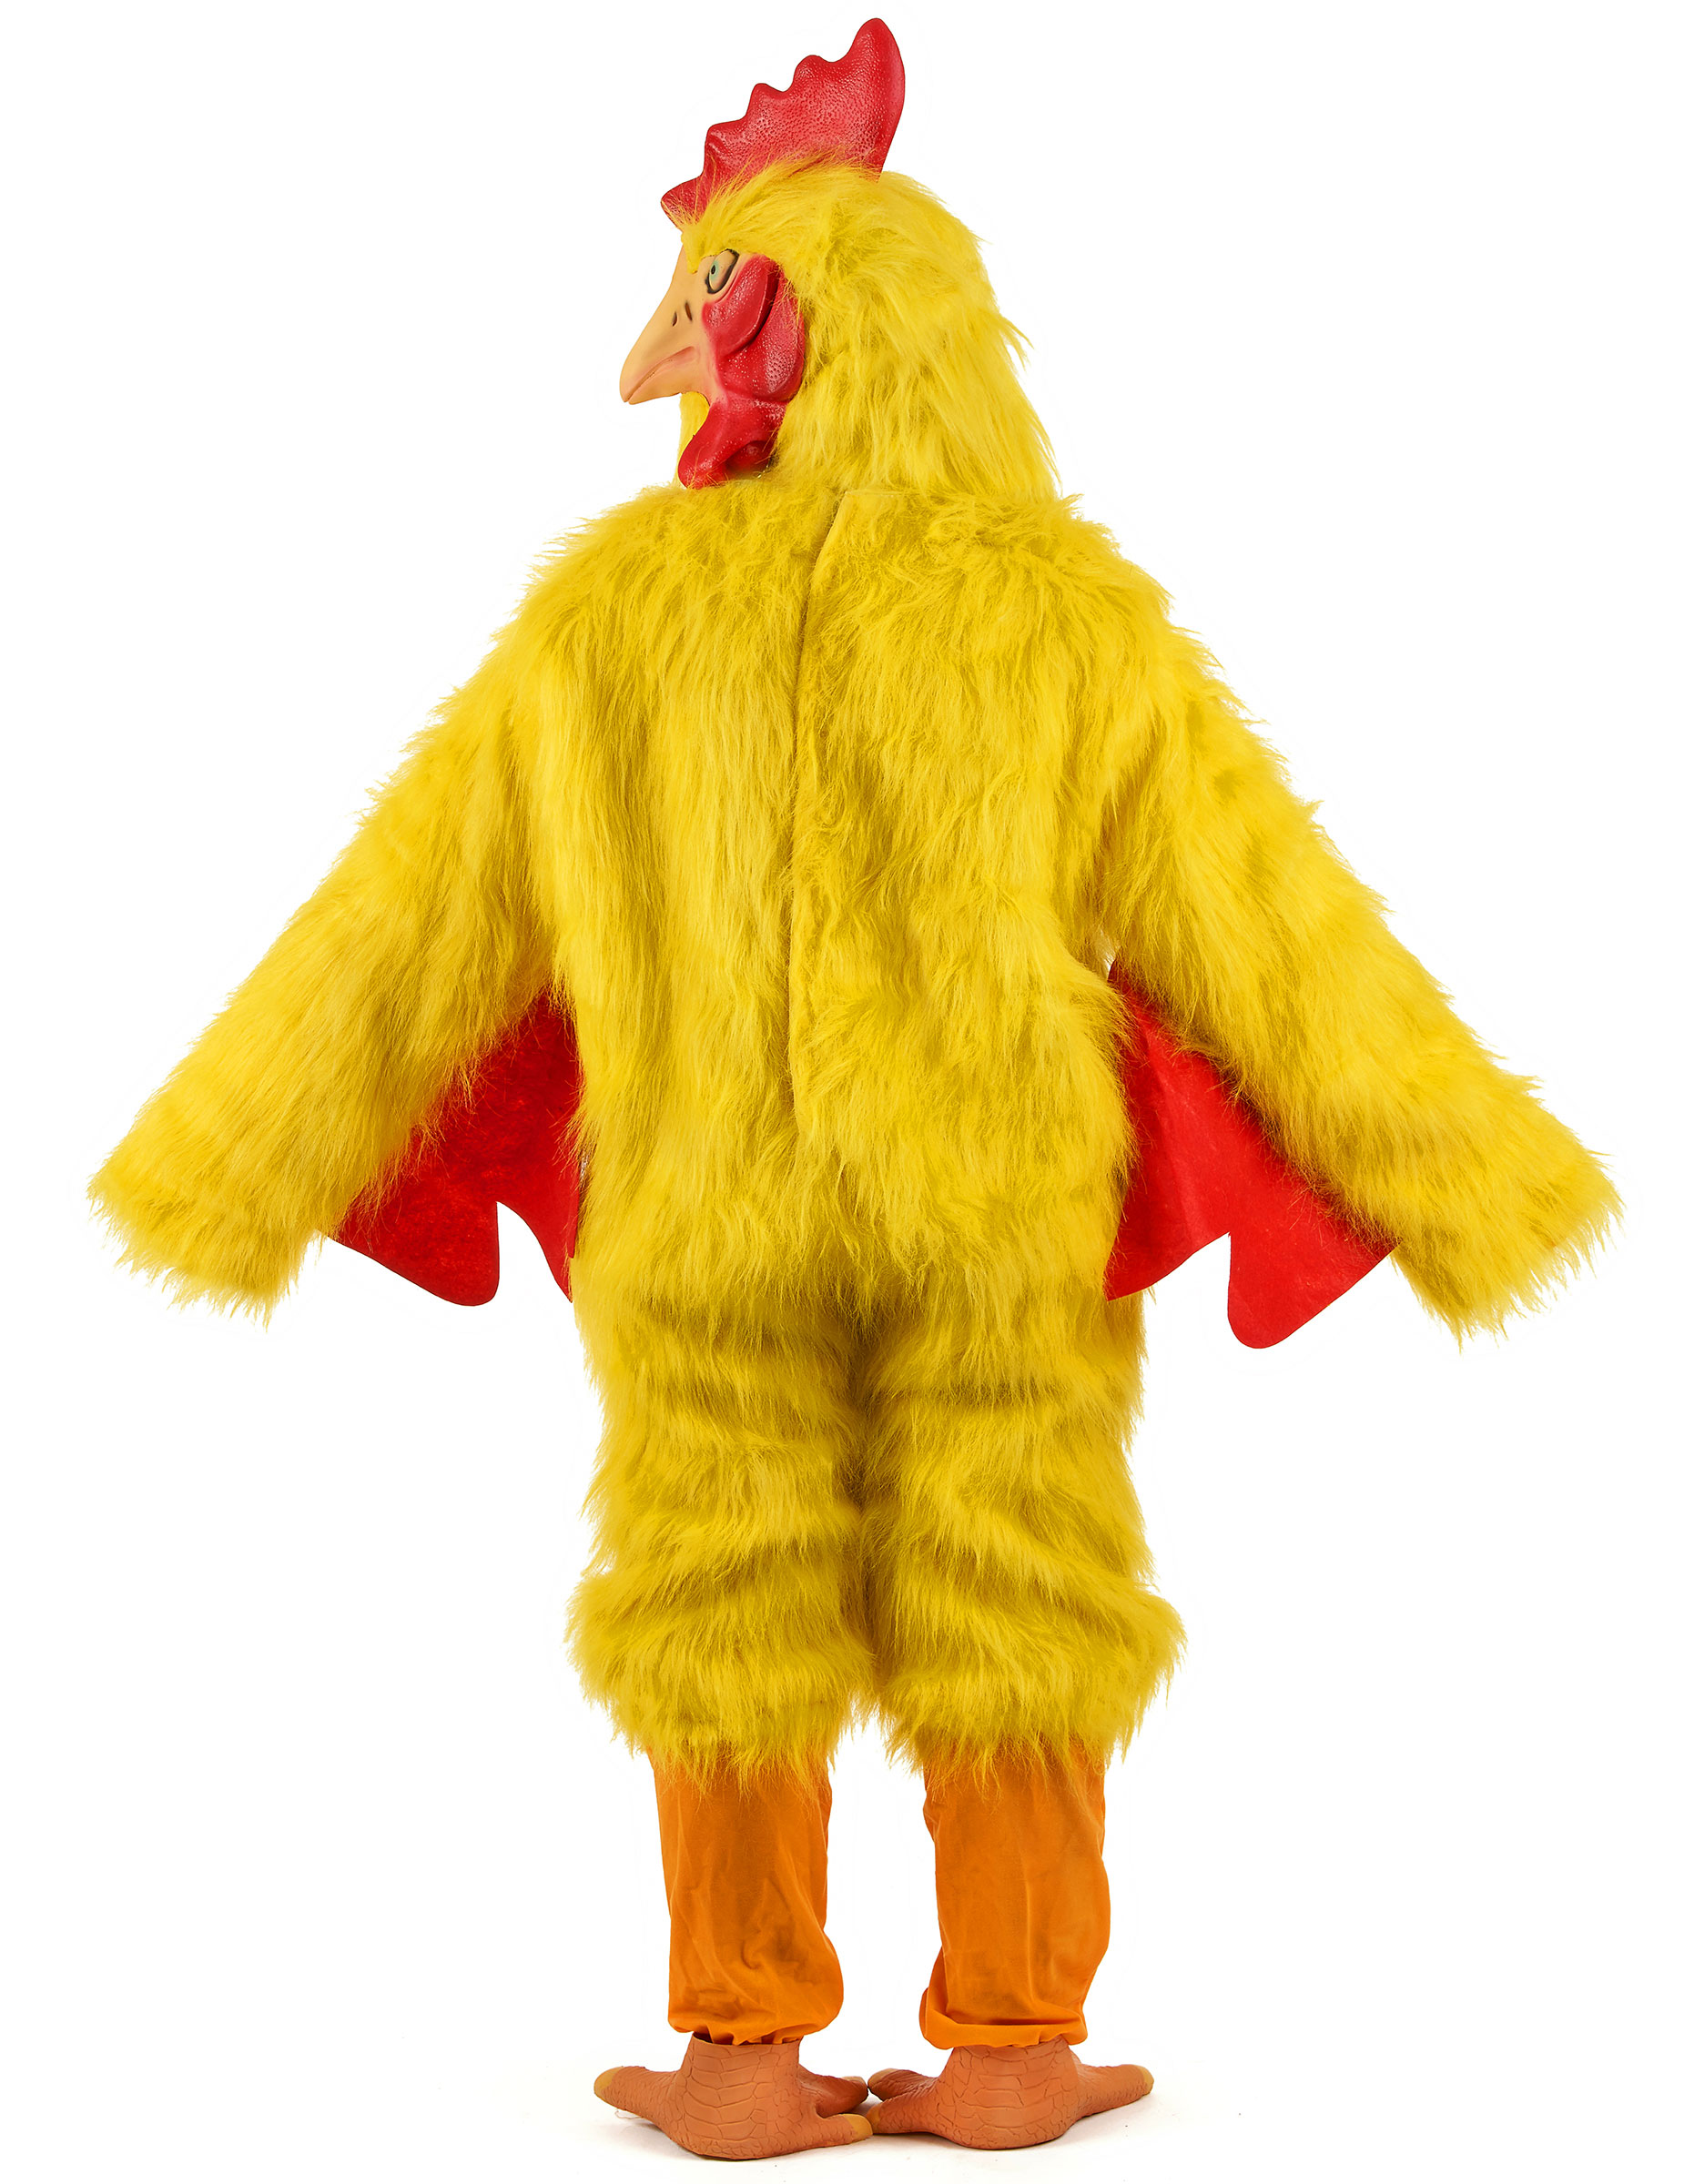 Download Free Photo Yellow Chicken Animal Chicken Fun Free Download Jooinn Yellowimages Mockups